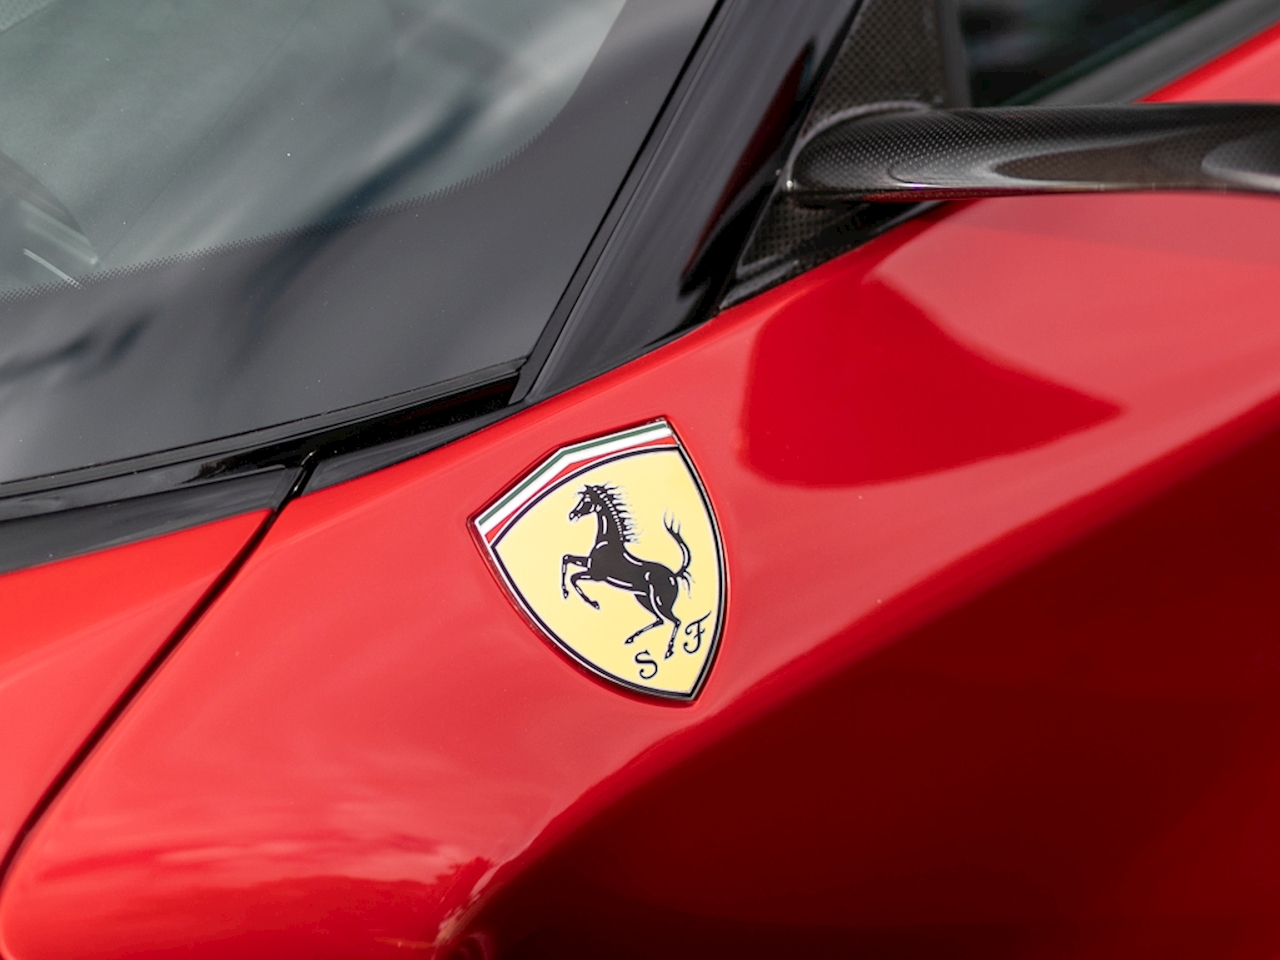 A red Ferrari car showing the Ferrari logo